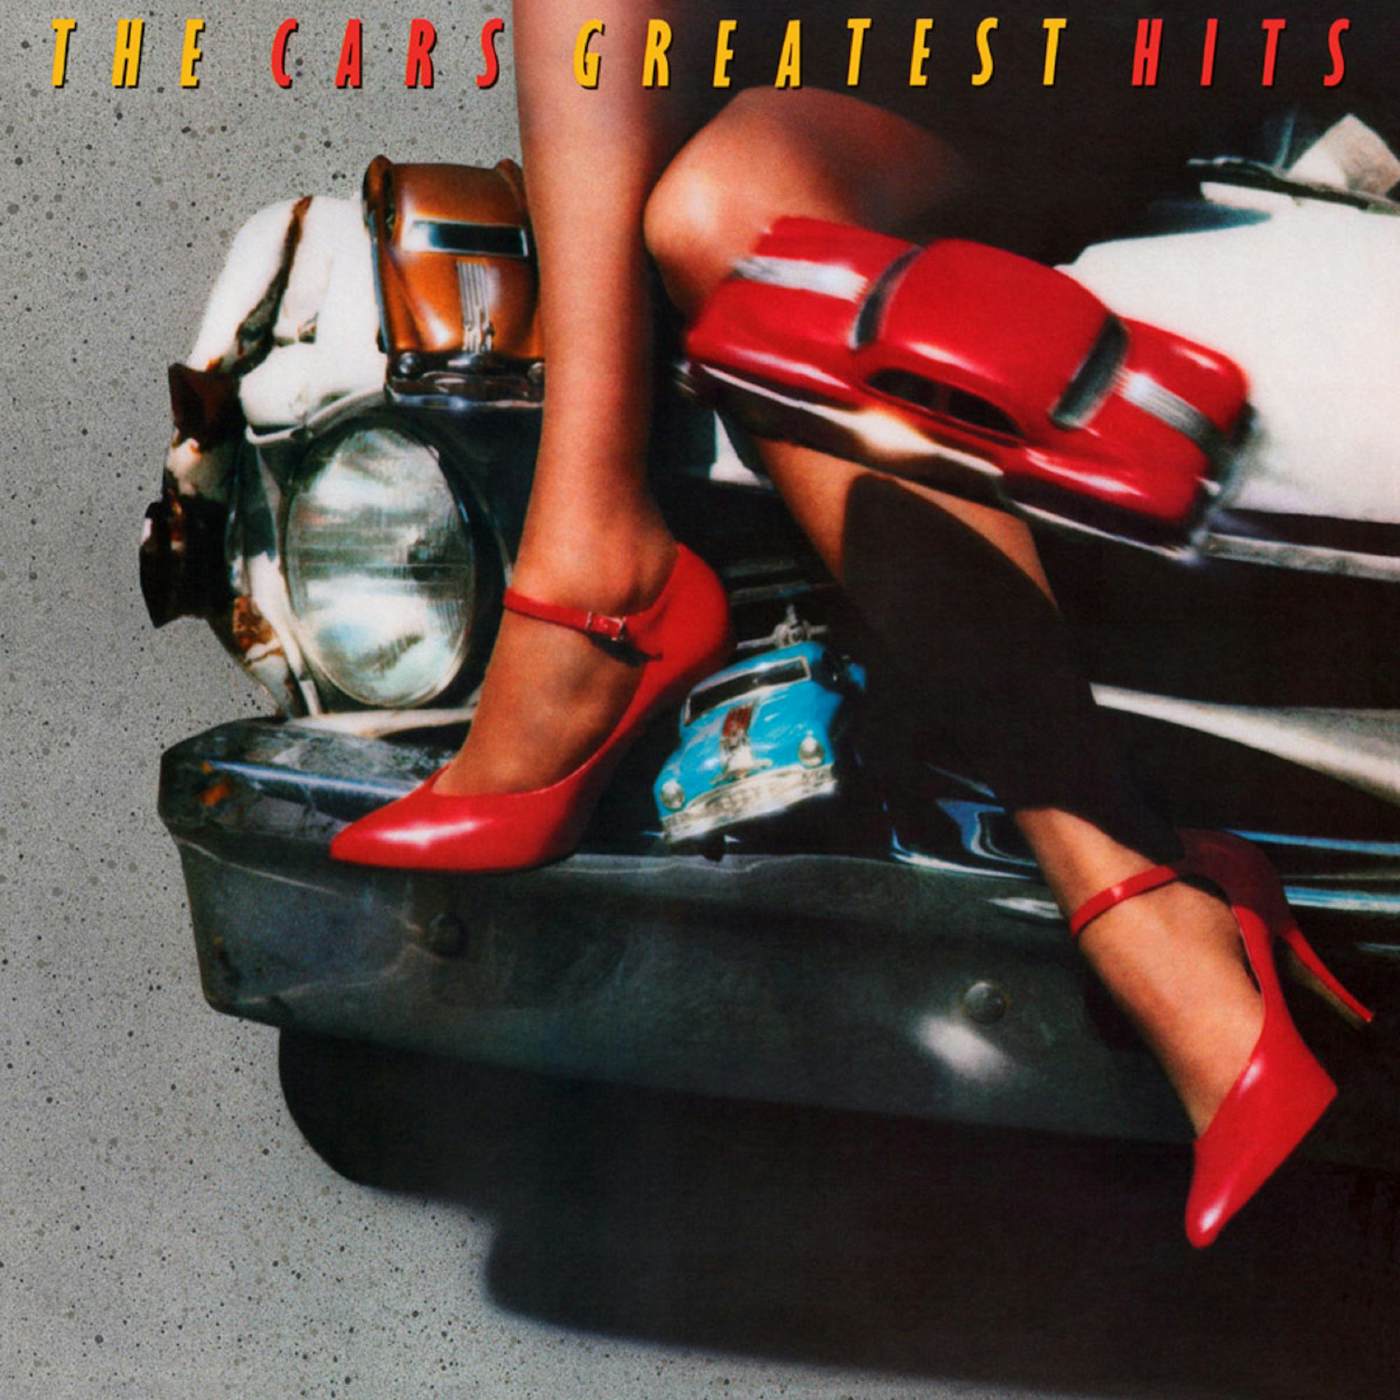 Betjening mulig Sandet Snavs The Cars Greatest Hits (Limited Annivers Vinyl Record